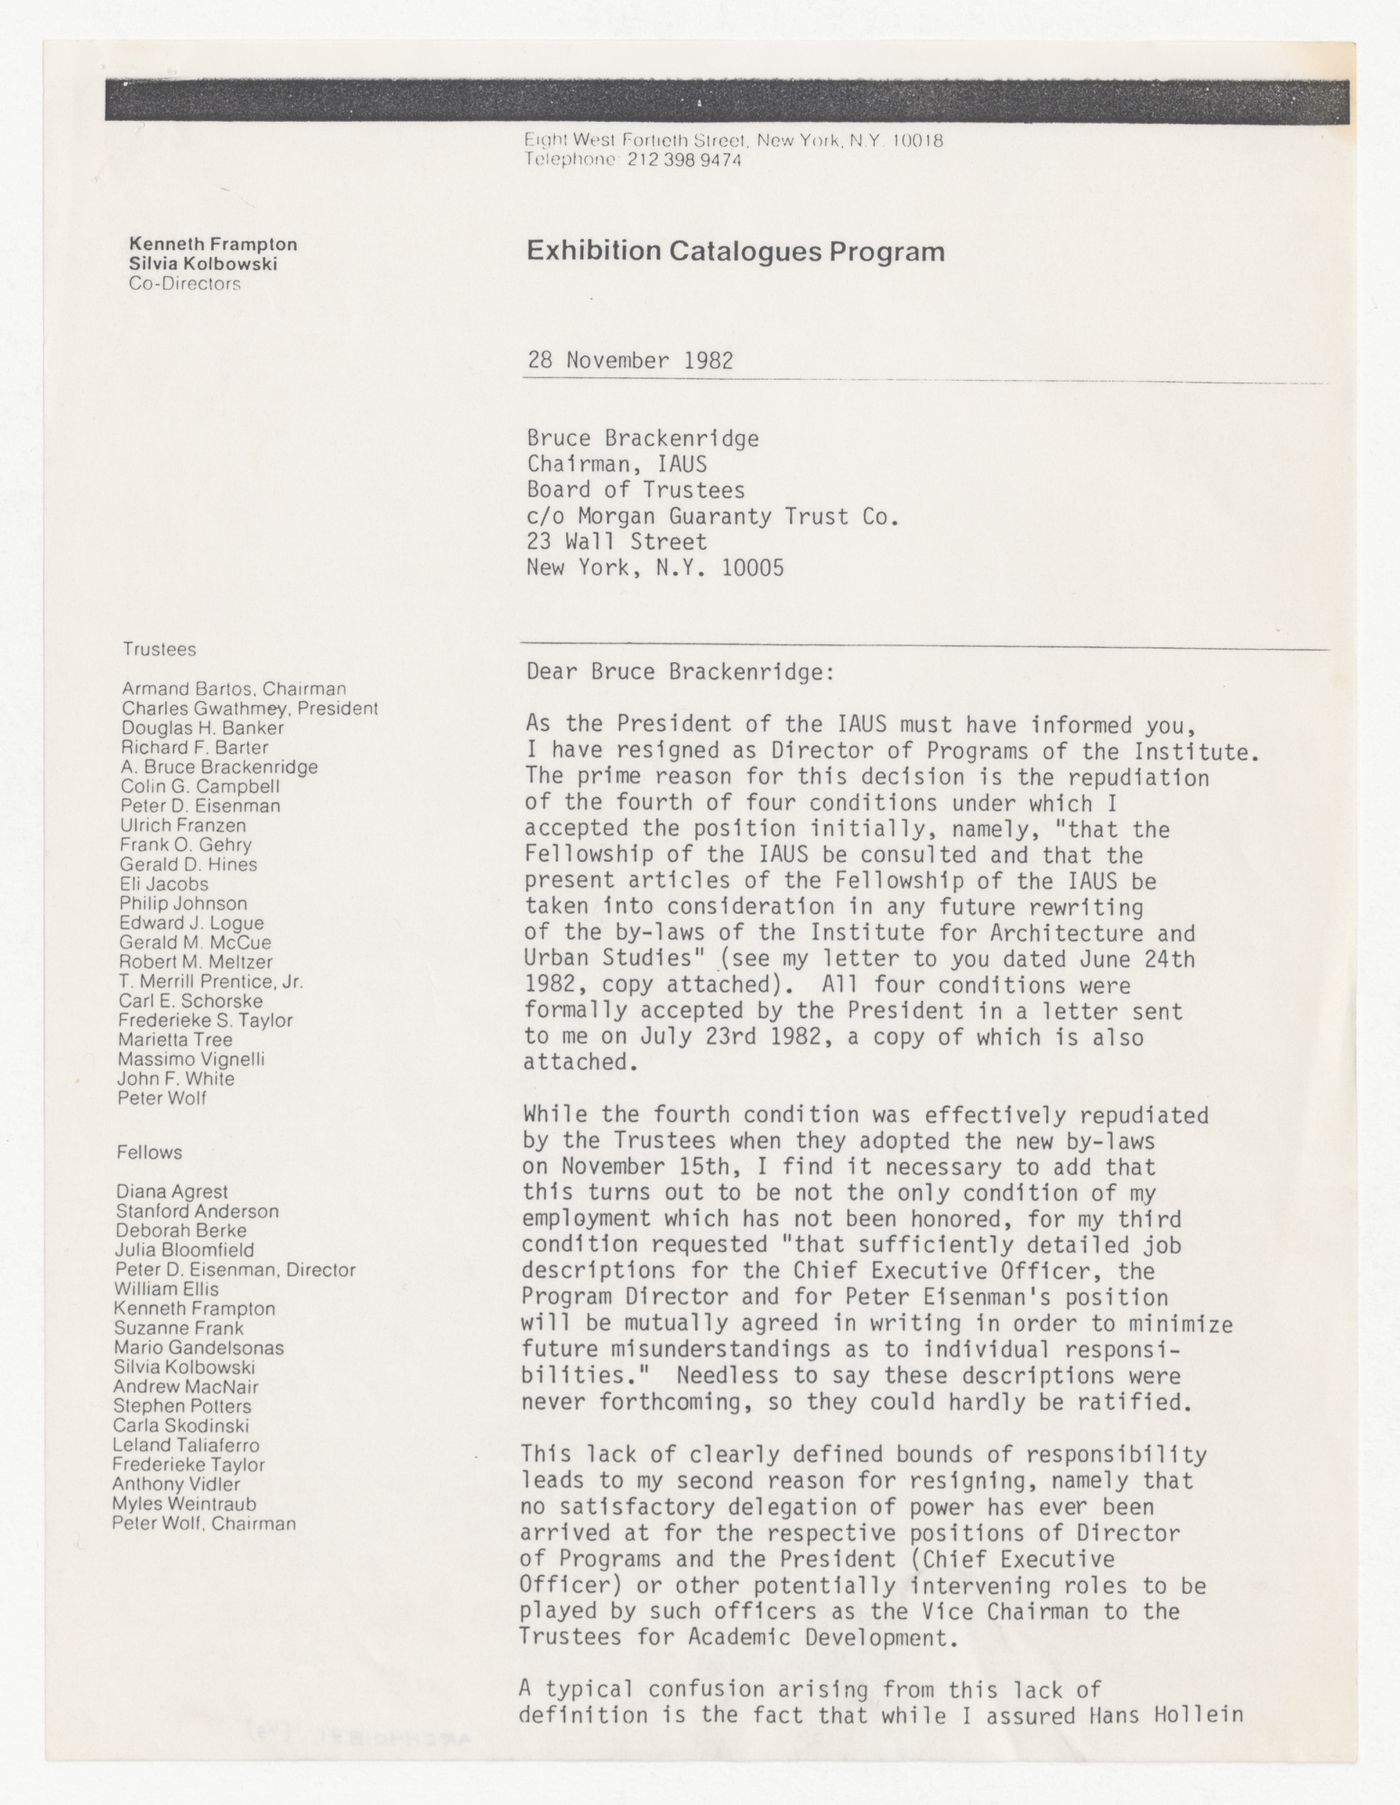 Letter from Kenneth Frampton to Bruce Brackenridge about Frampton's resignation as Program Director